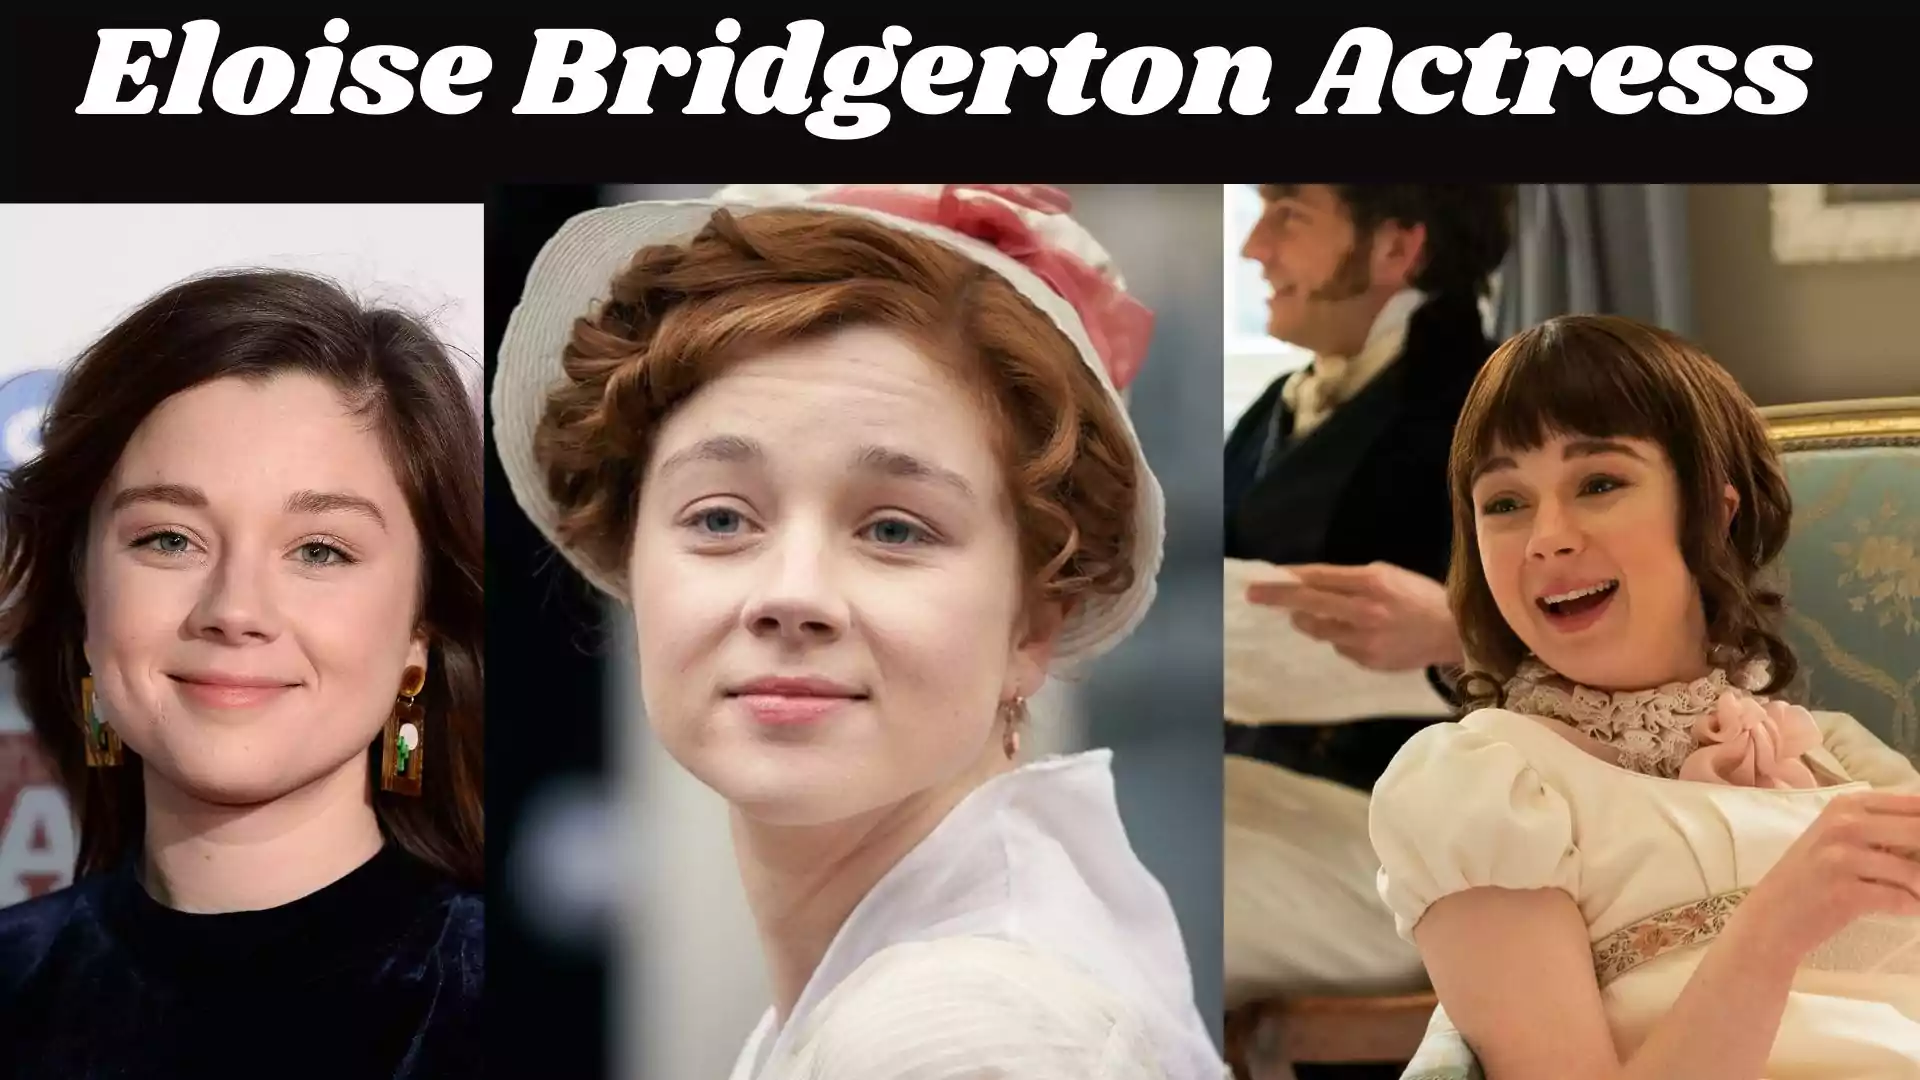 Eloise Bridgerton Actress Wallpaper and images